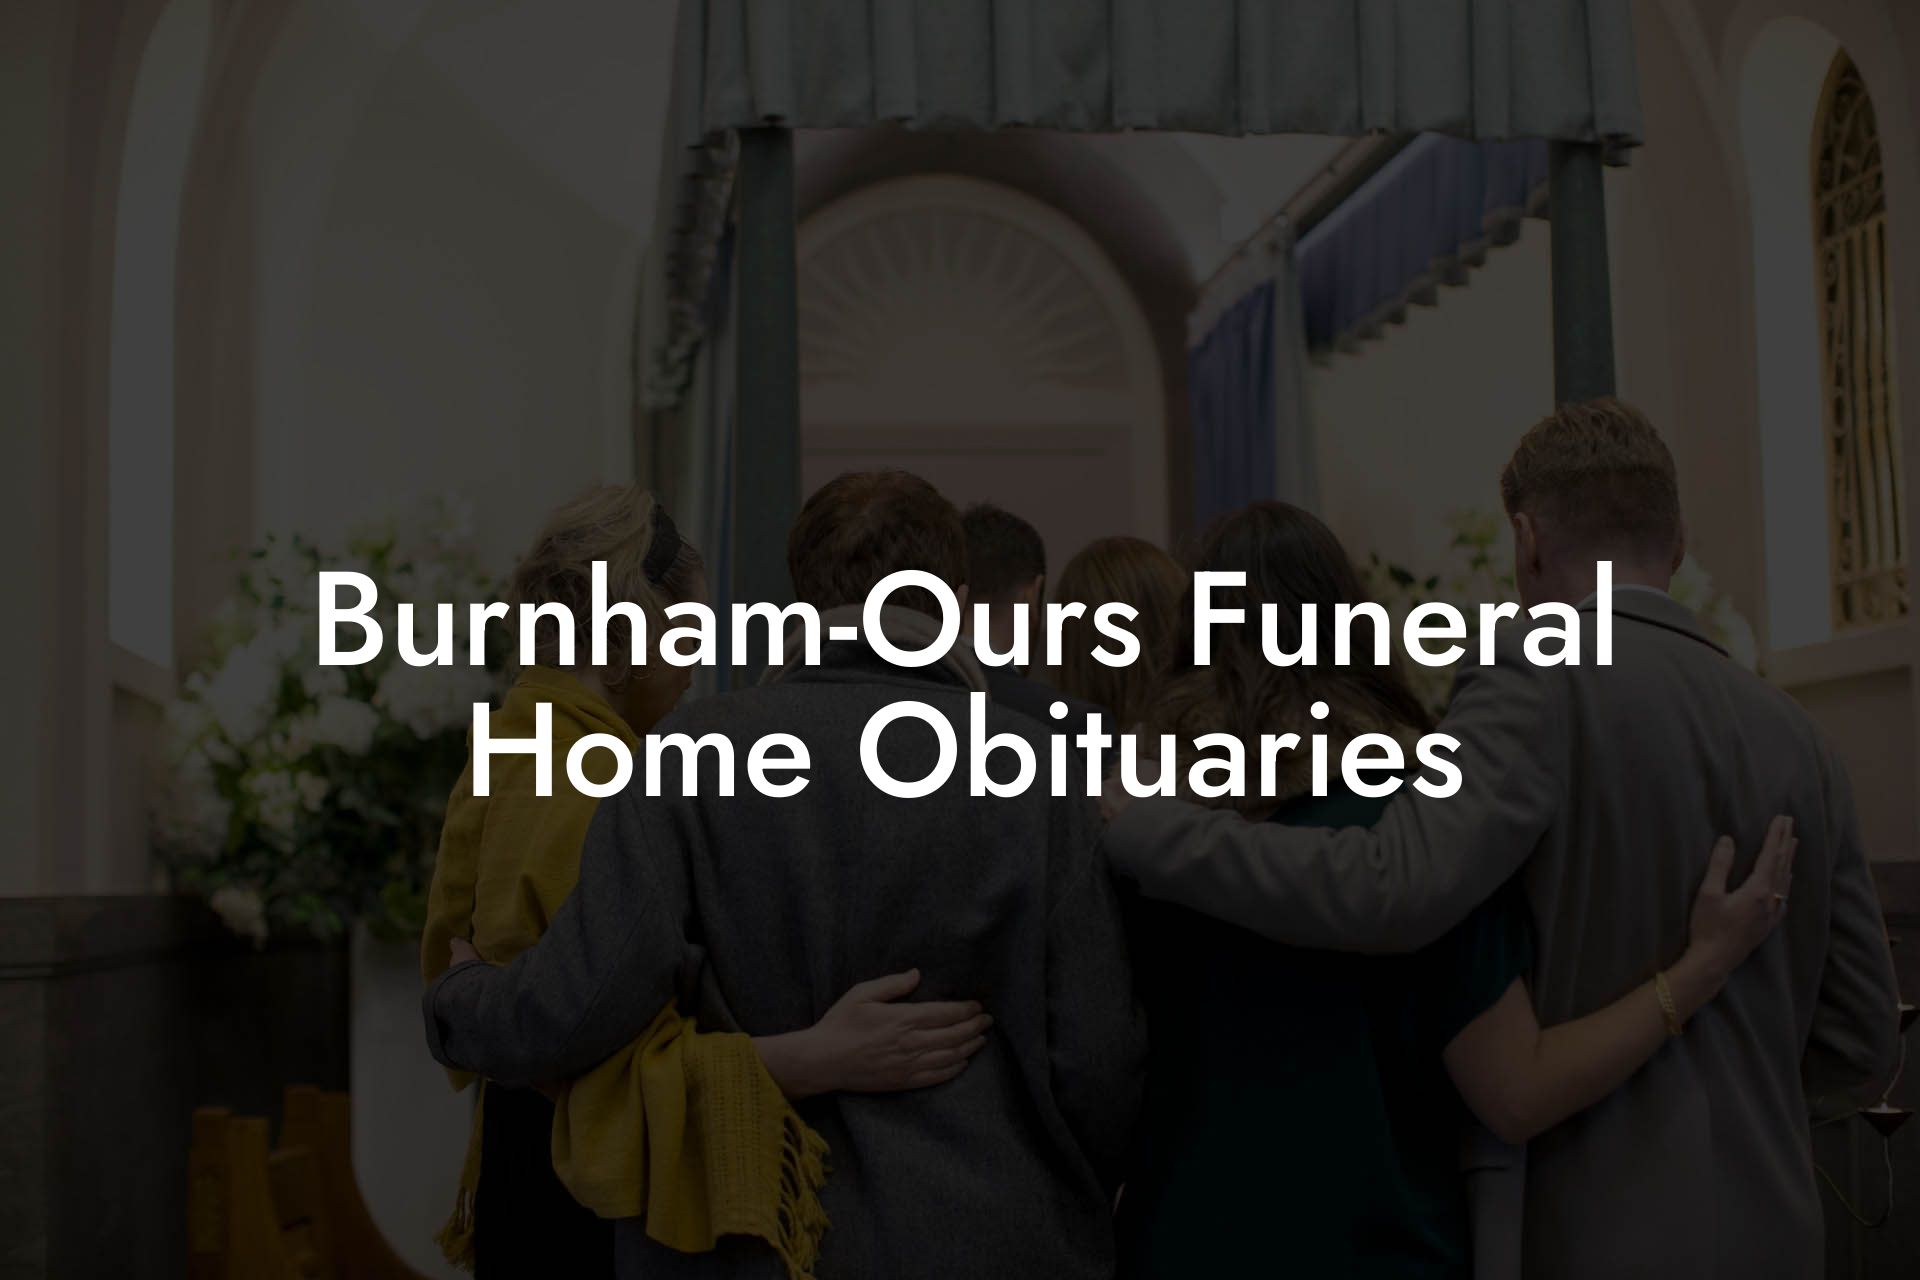 Burnham-Ours Funeral Home Obituaries